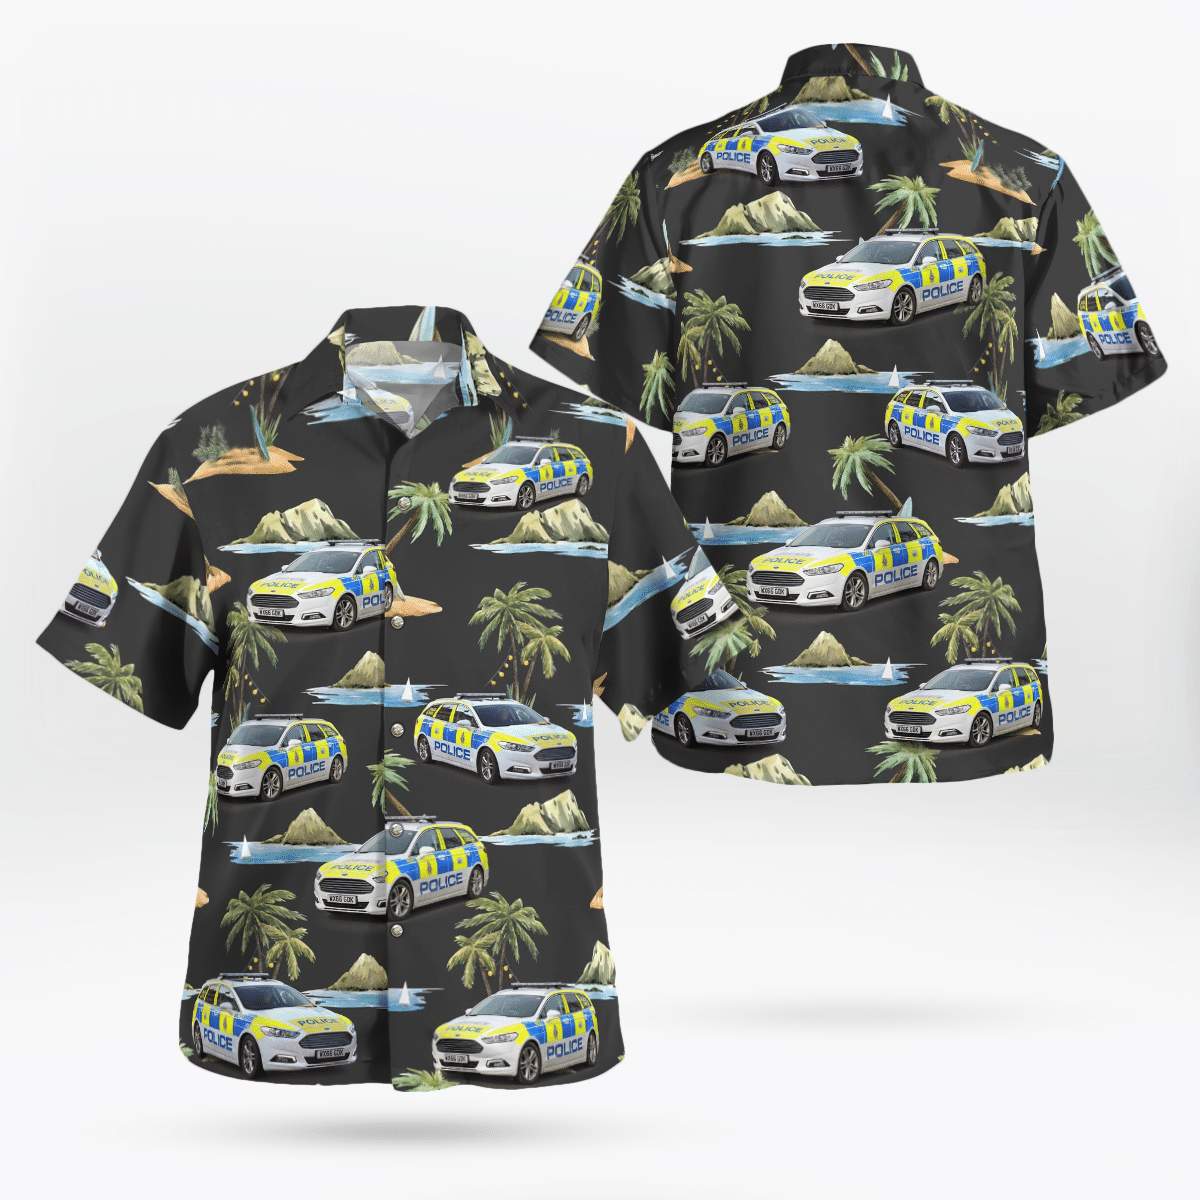 Listed below are some High-quality Aloha Shirt 117